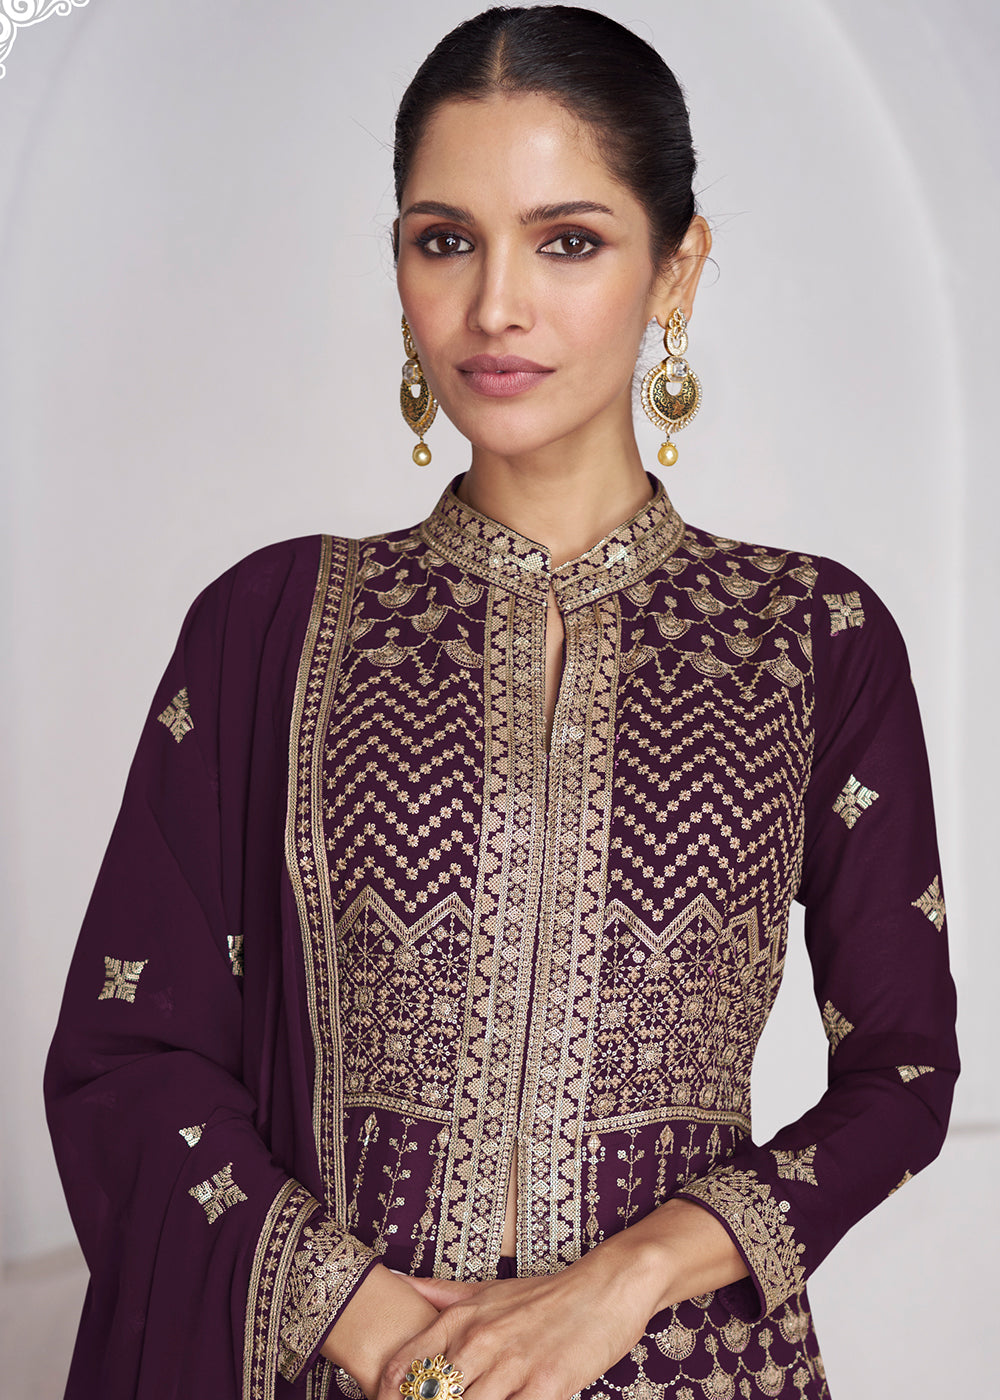 Buy Now Wedding Wear Plum Purple Lehenga Skirt Anarkali Suit Online in USA, UK, Australia, New Zealand, Canada & Worldwide at Empress Clothing.